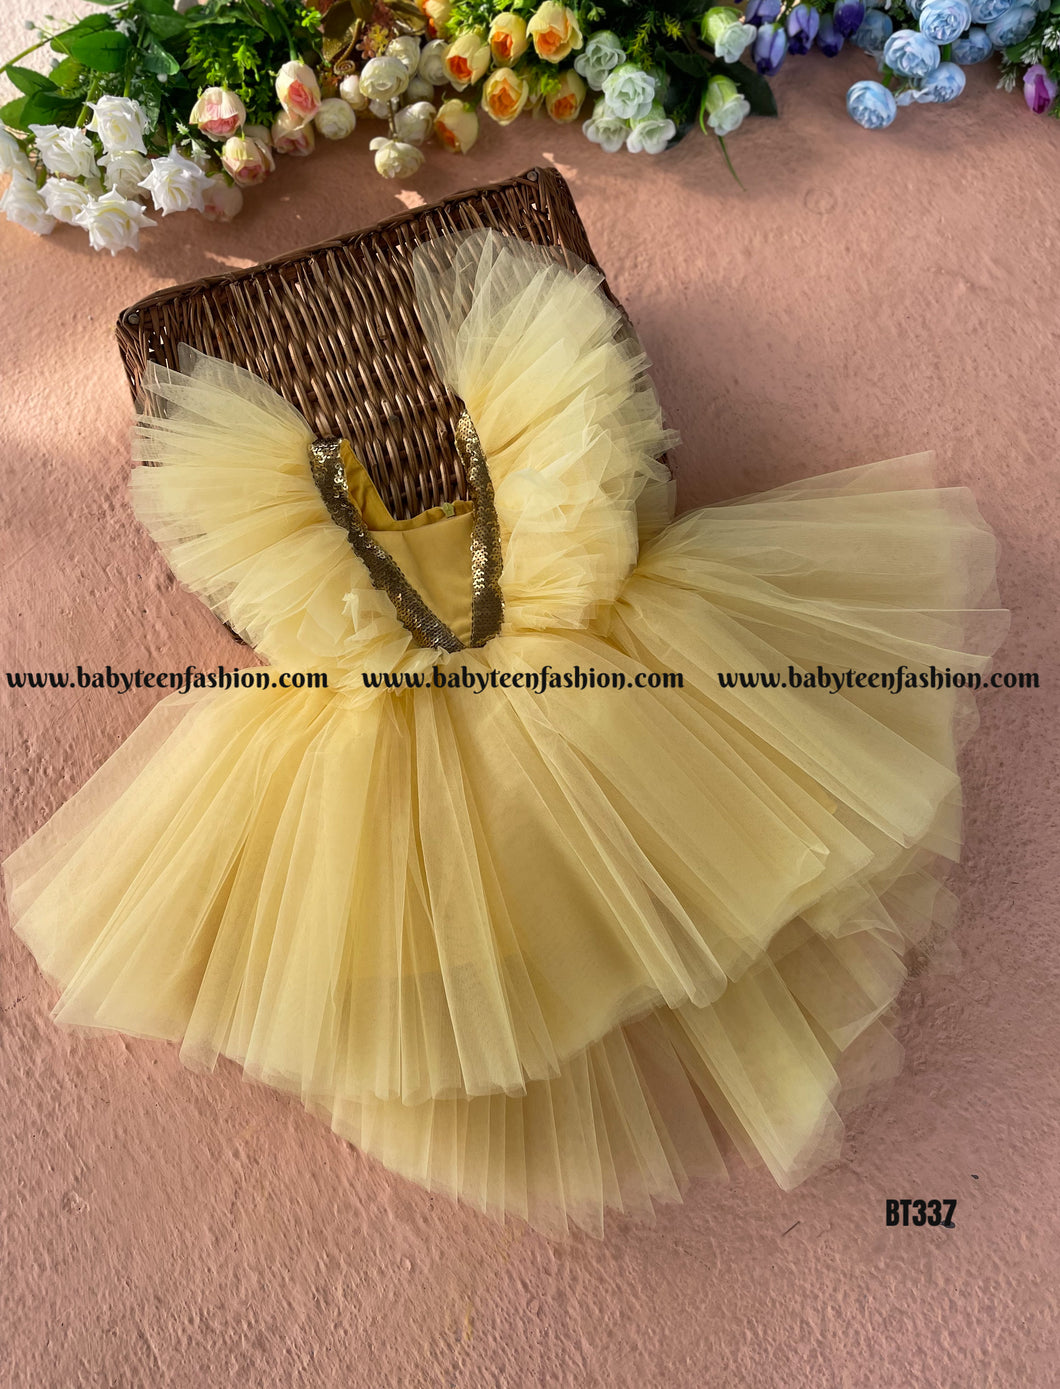 BT337 Sunshine Swirl Dress – Make Every Moment Count